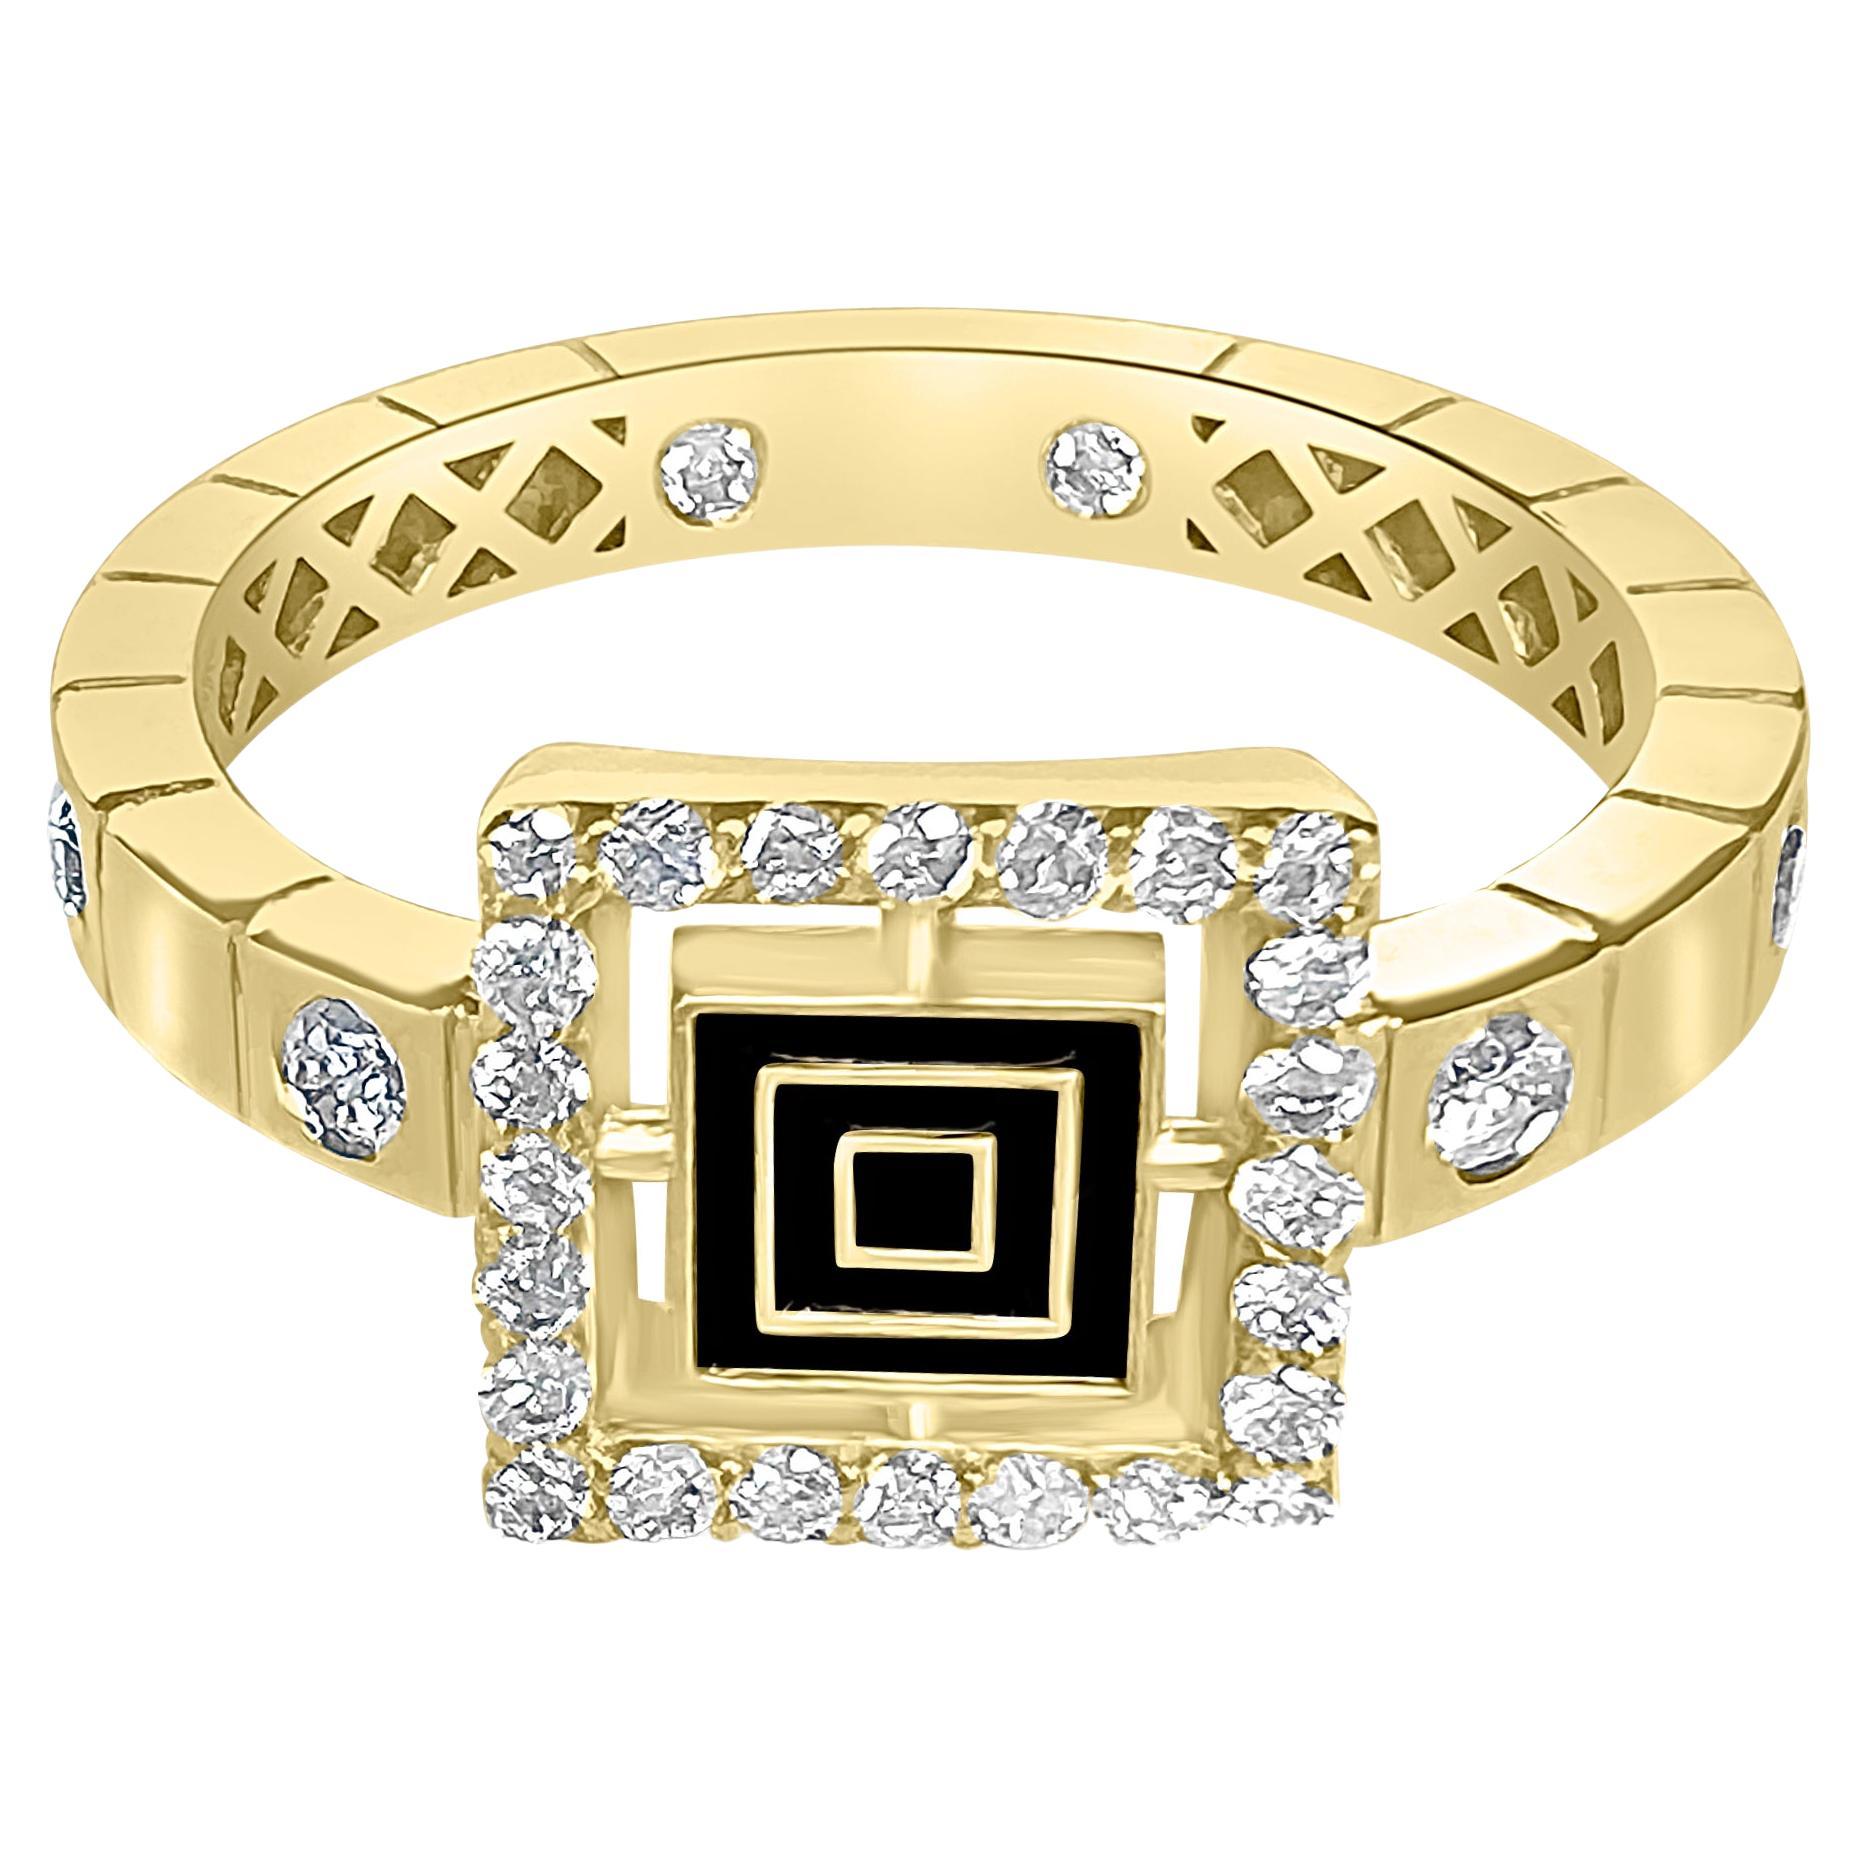 Architectural Shape Square Enamel Fashion Diamond Ring sz 7 For Sale